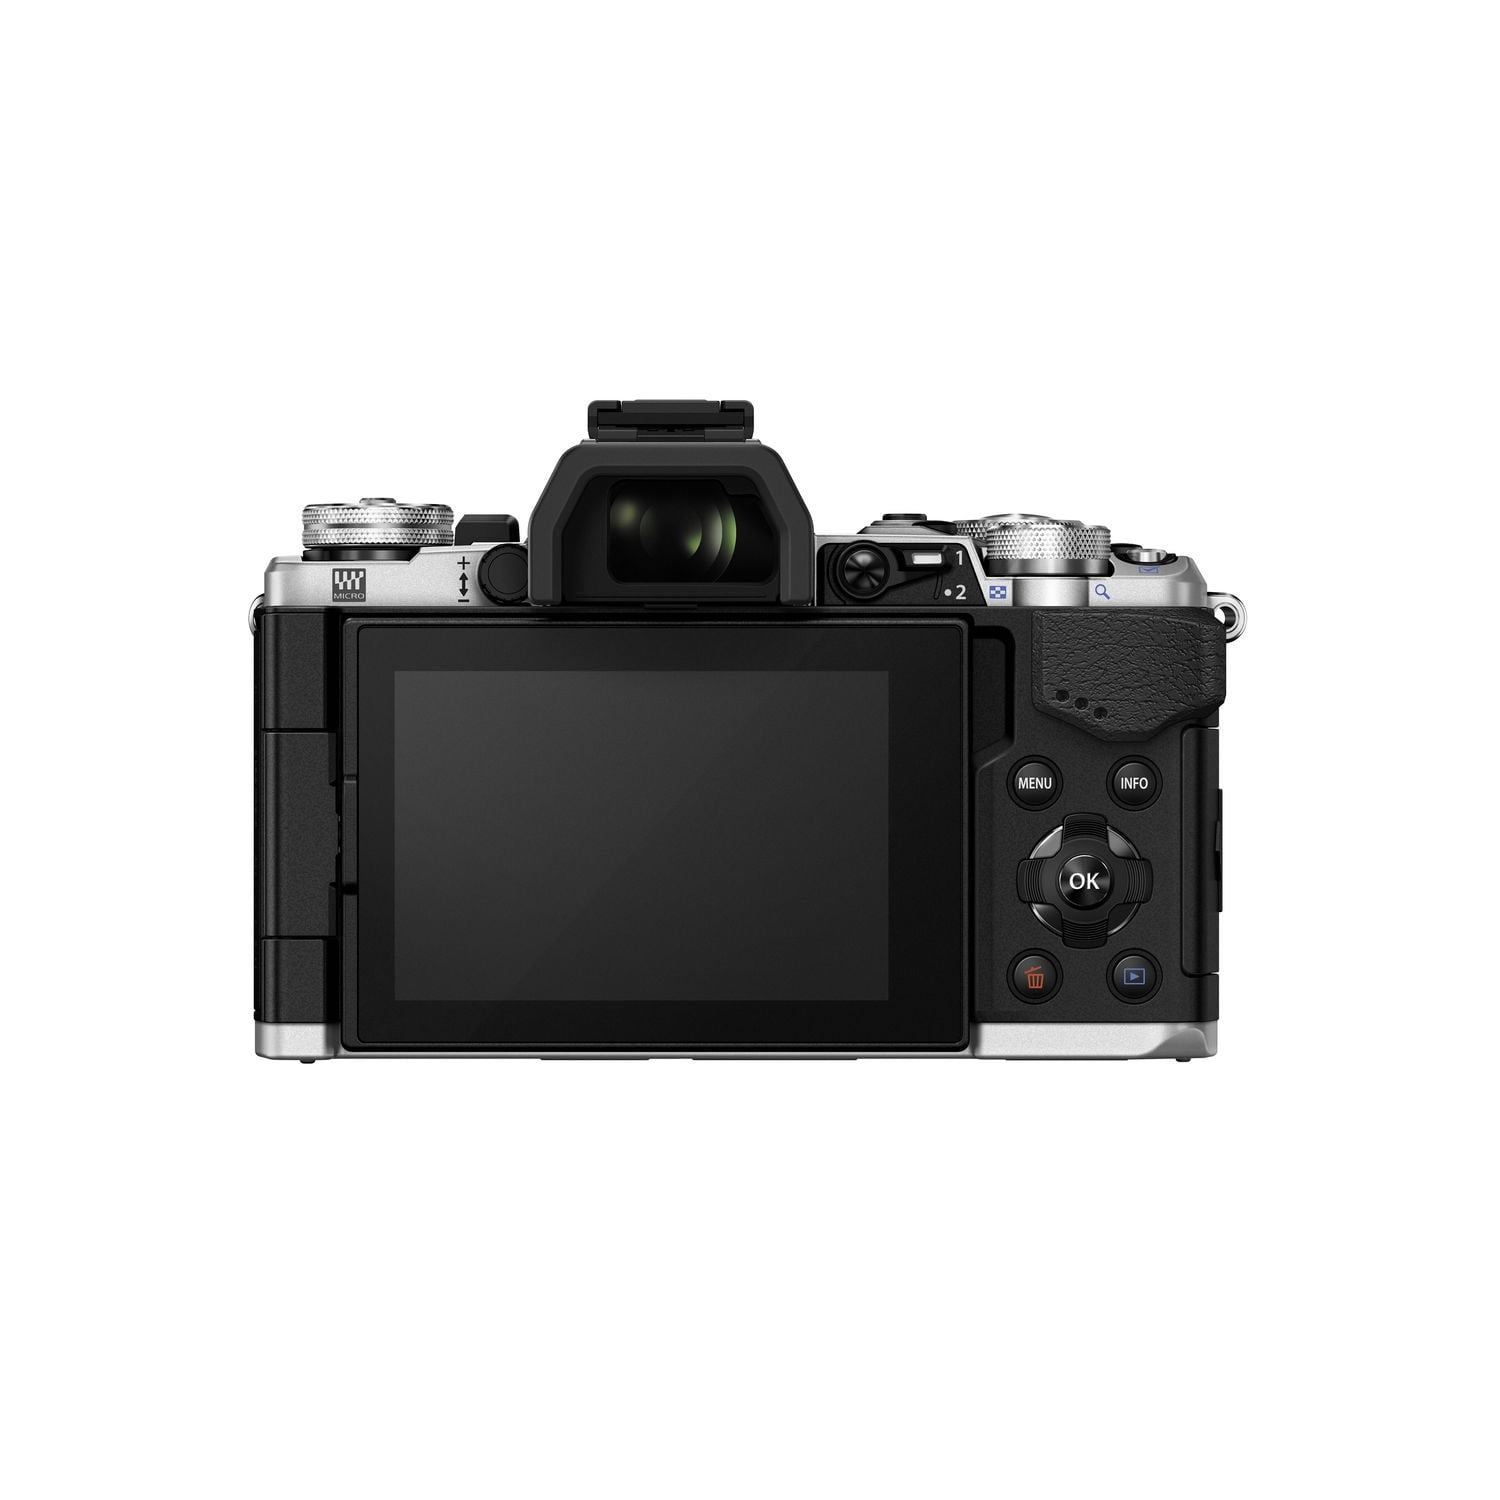 Olympus OM-D E-M5 Mark II Mirrorless Camera (Body Only), Silver